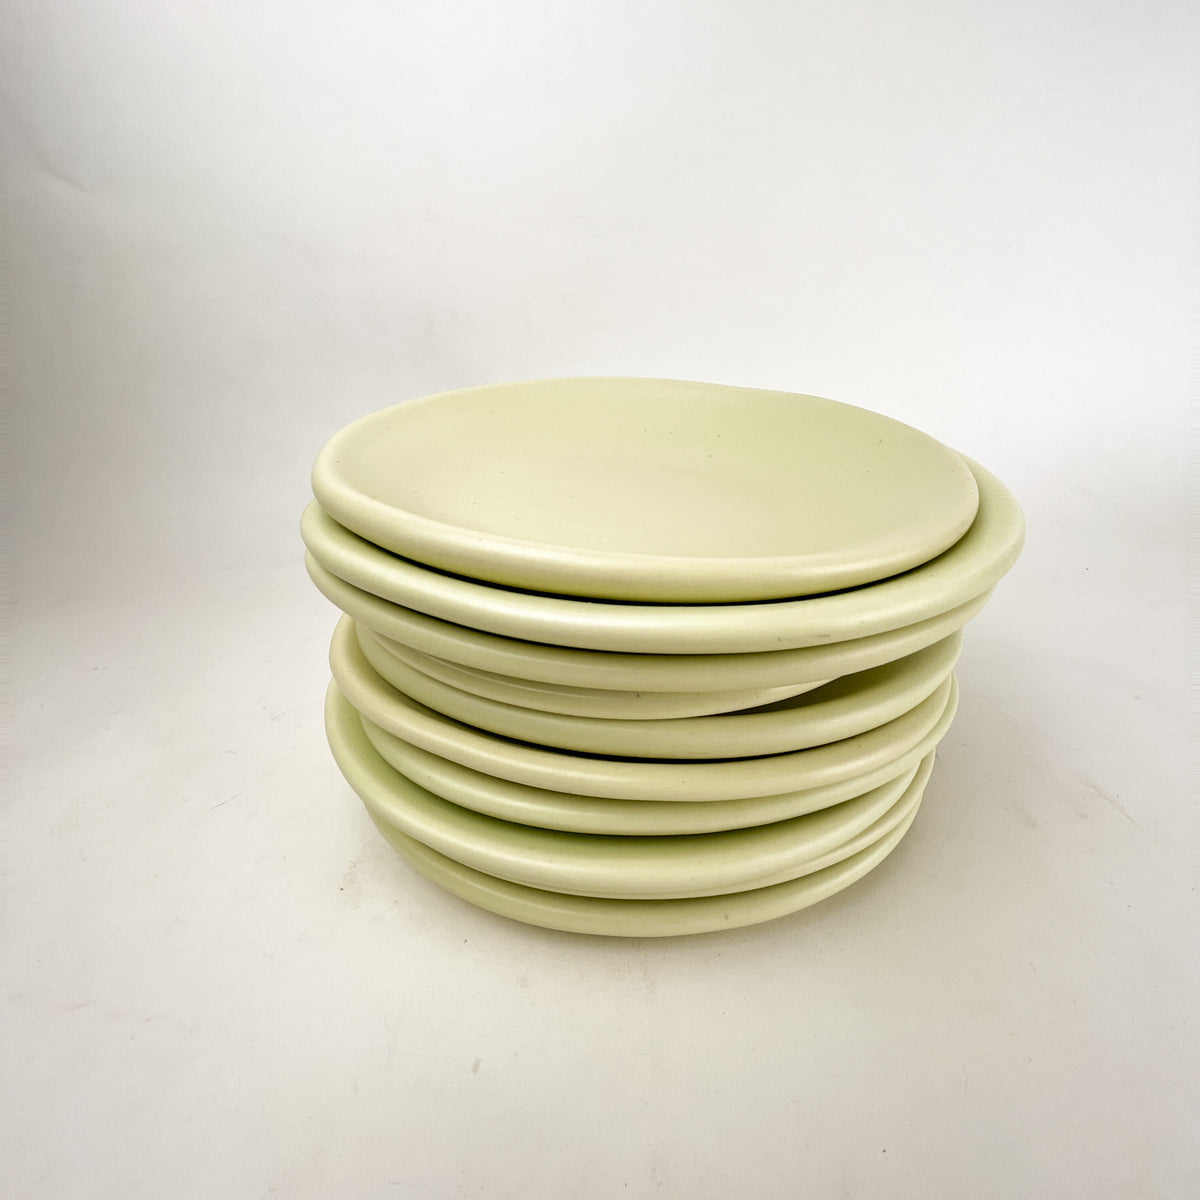 <!--3500--!>Tableware - Shell Toast Plate